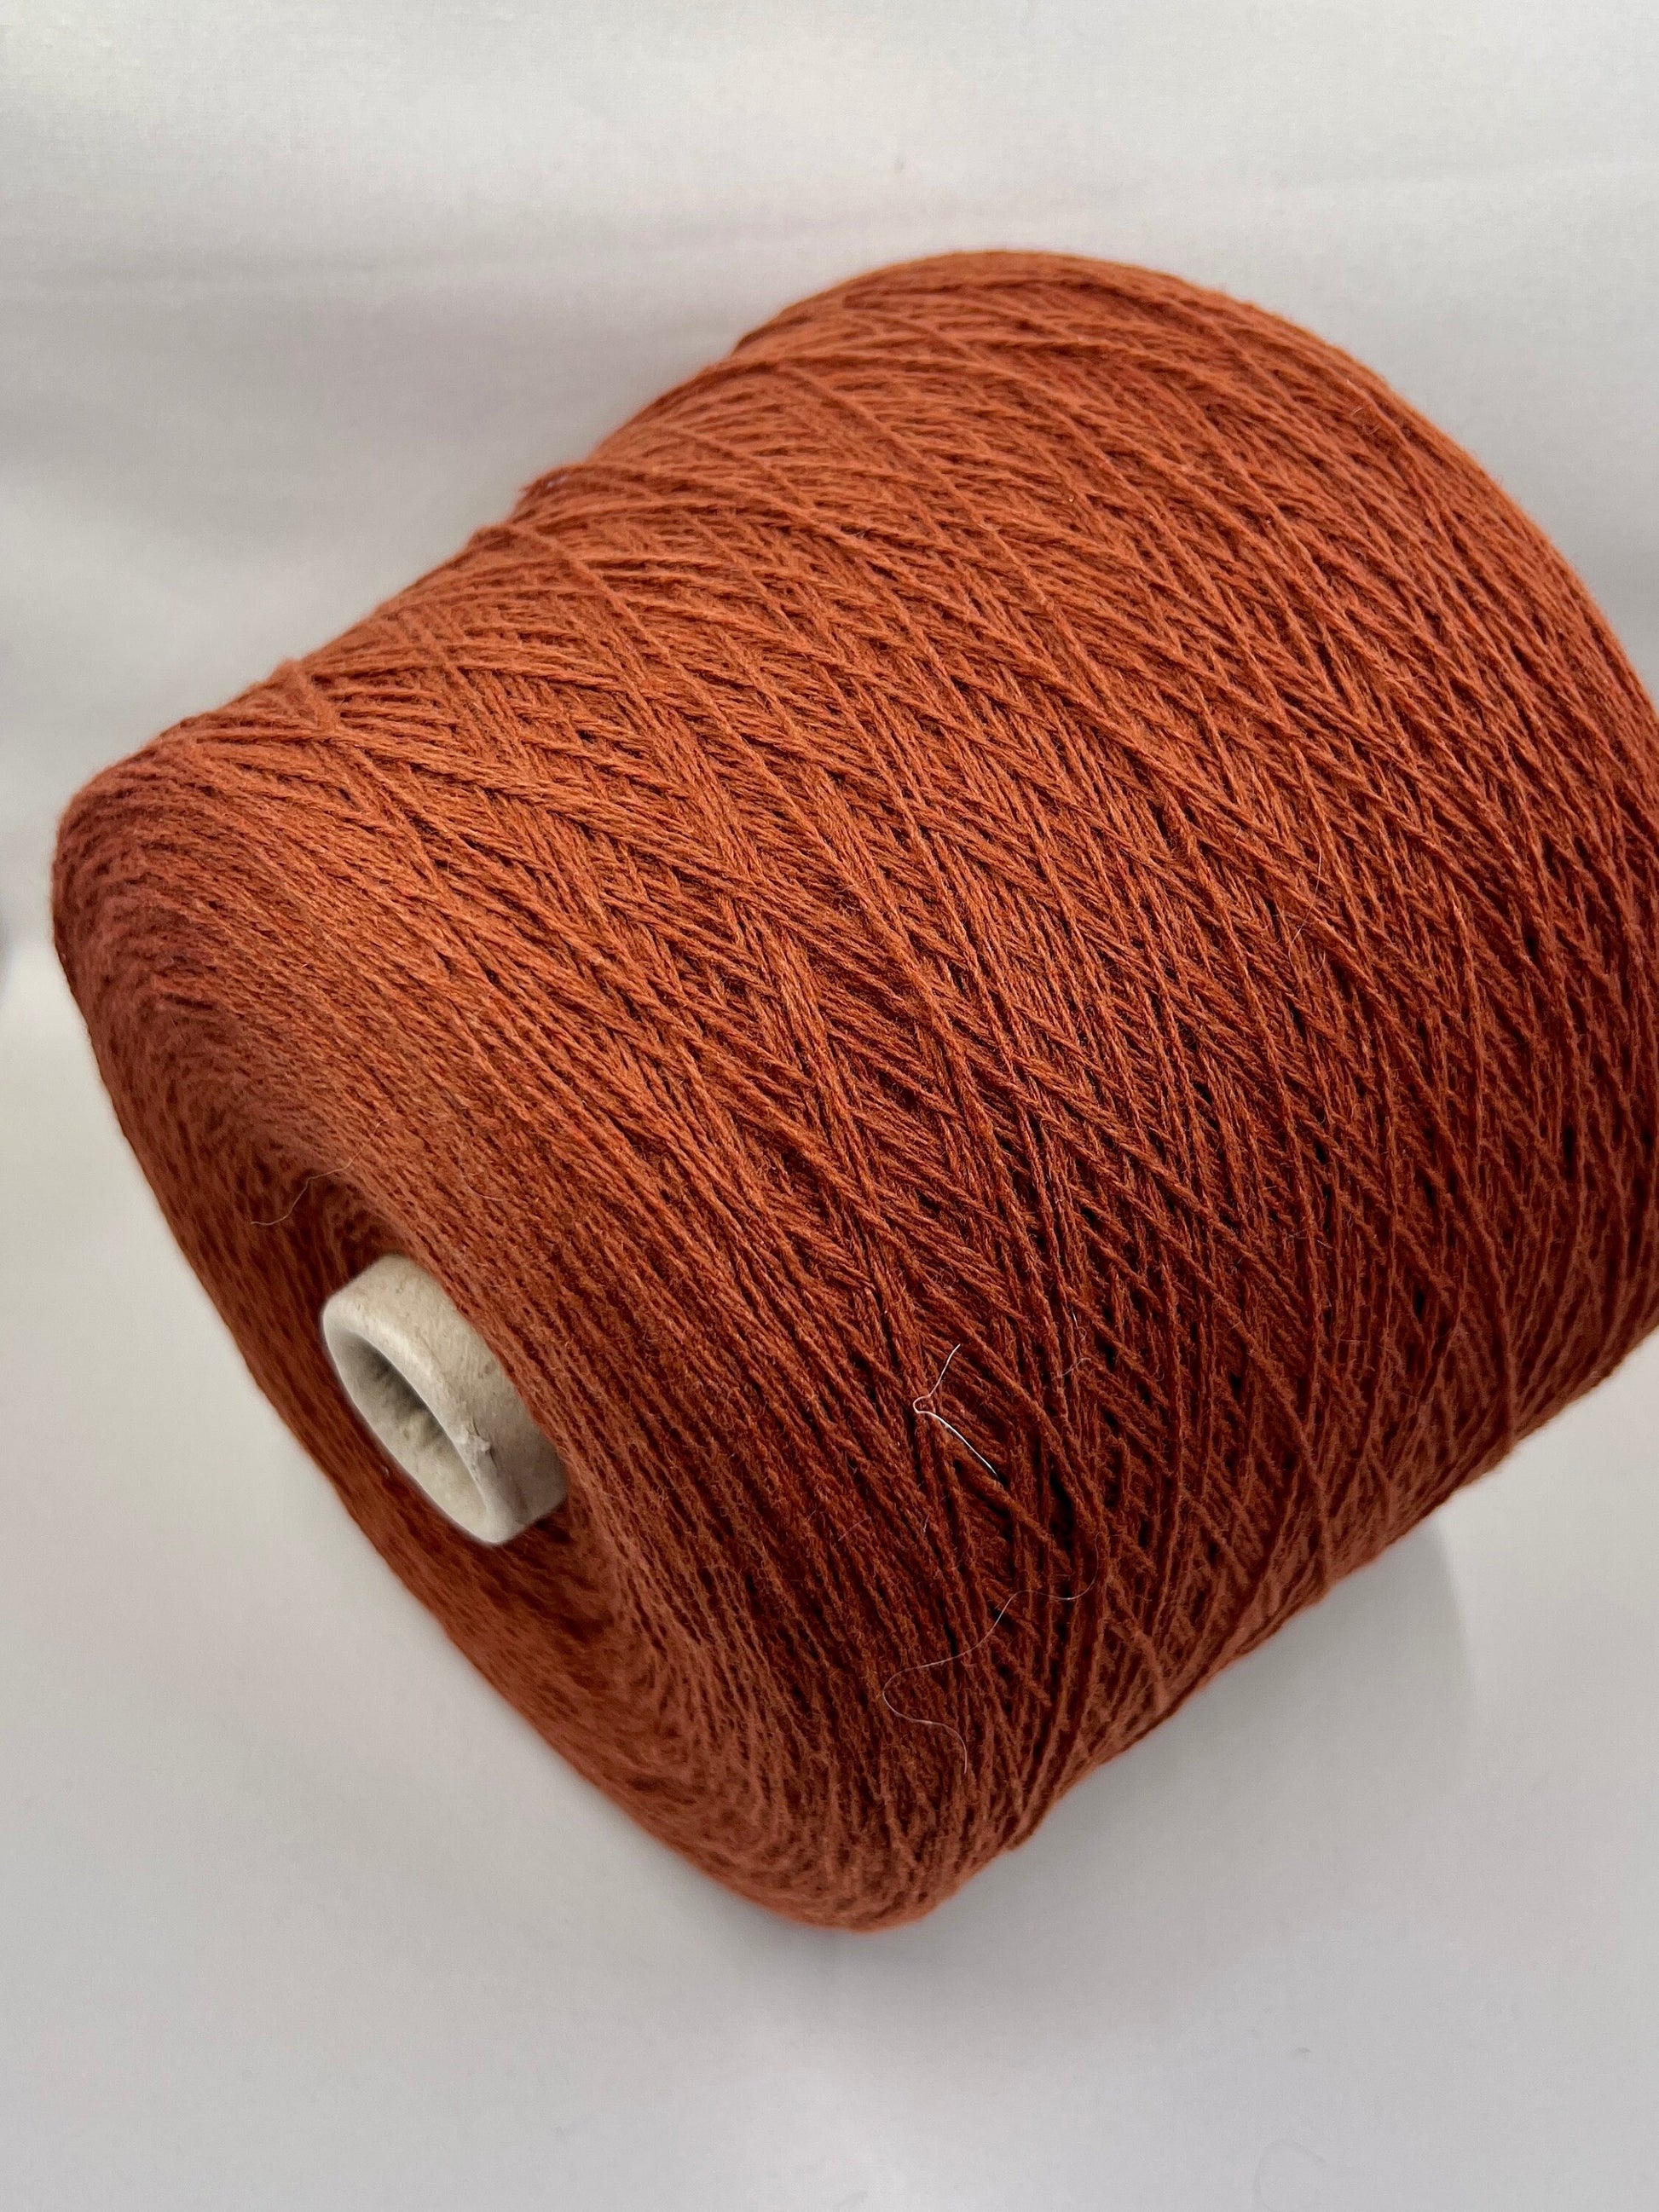 Cashmere Yarn 50%, Wool Yarn 50%, PROFILLO, Color Terra Siena (Rust)